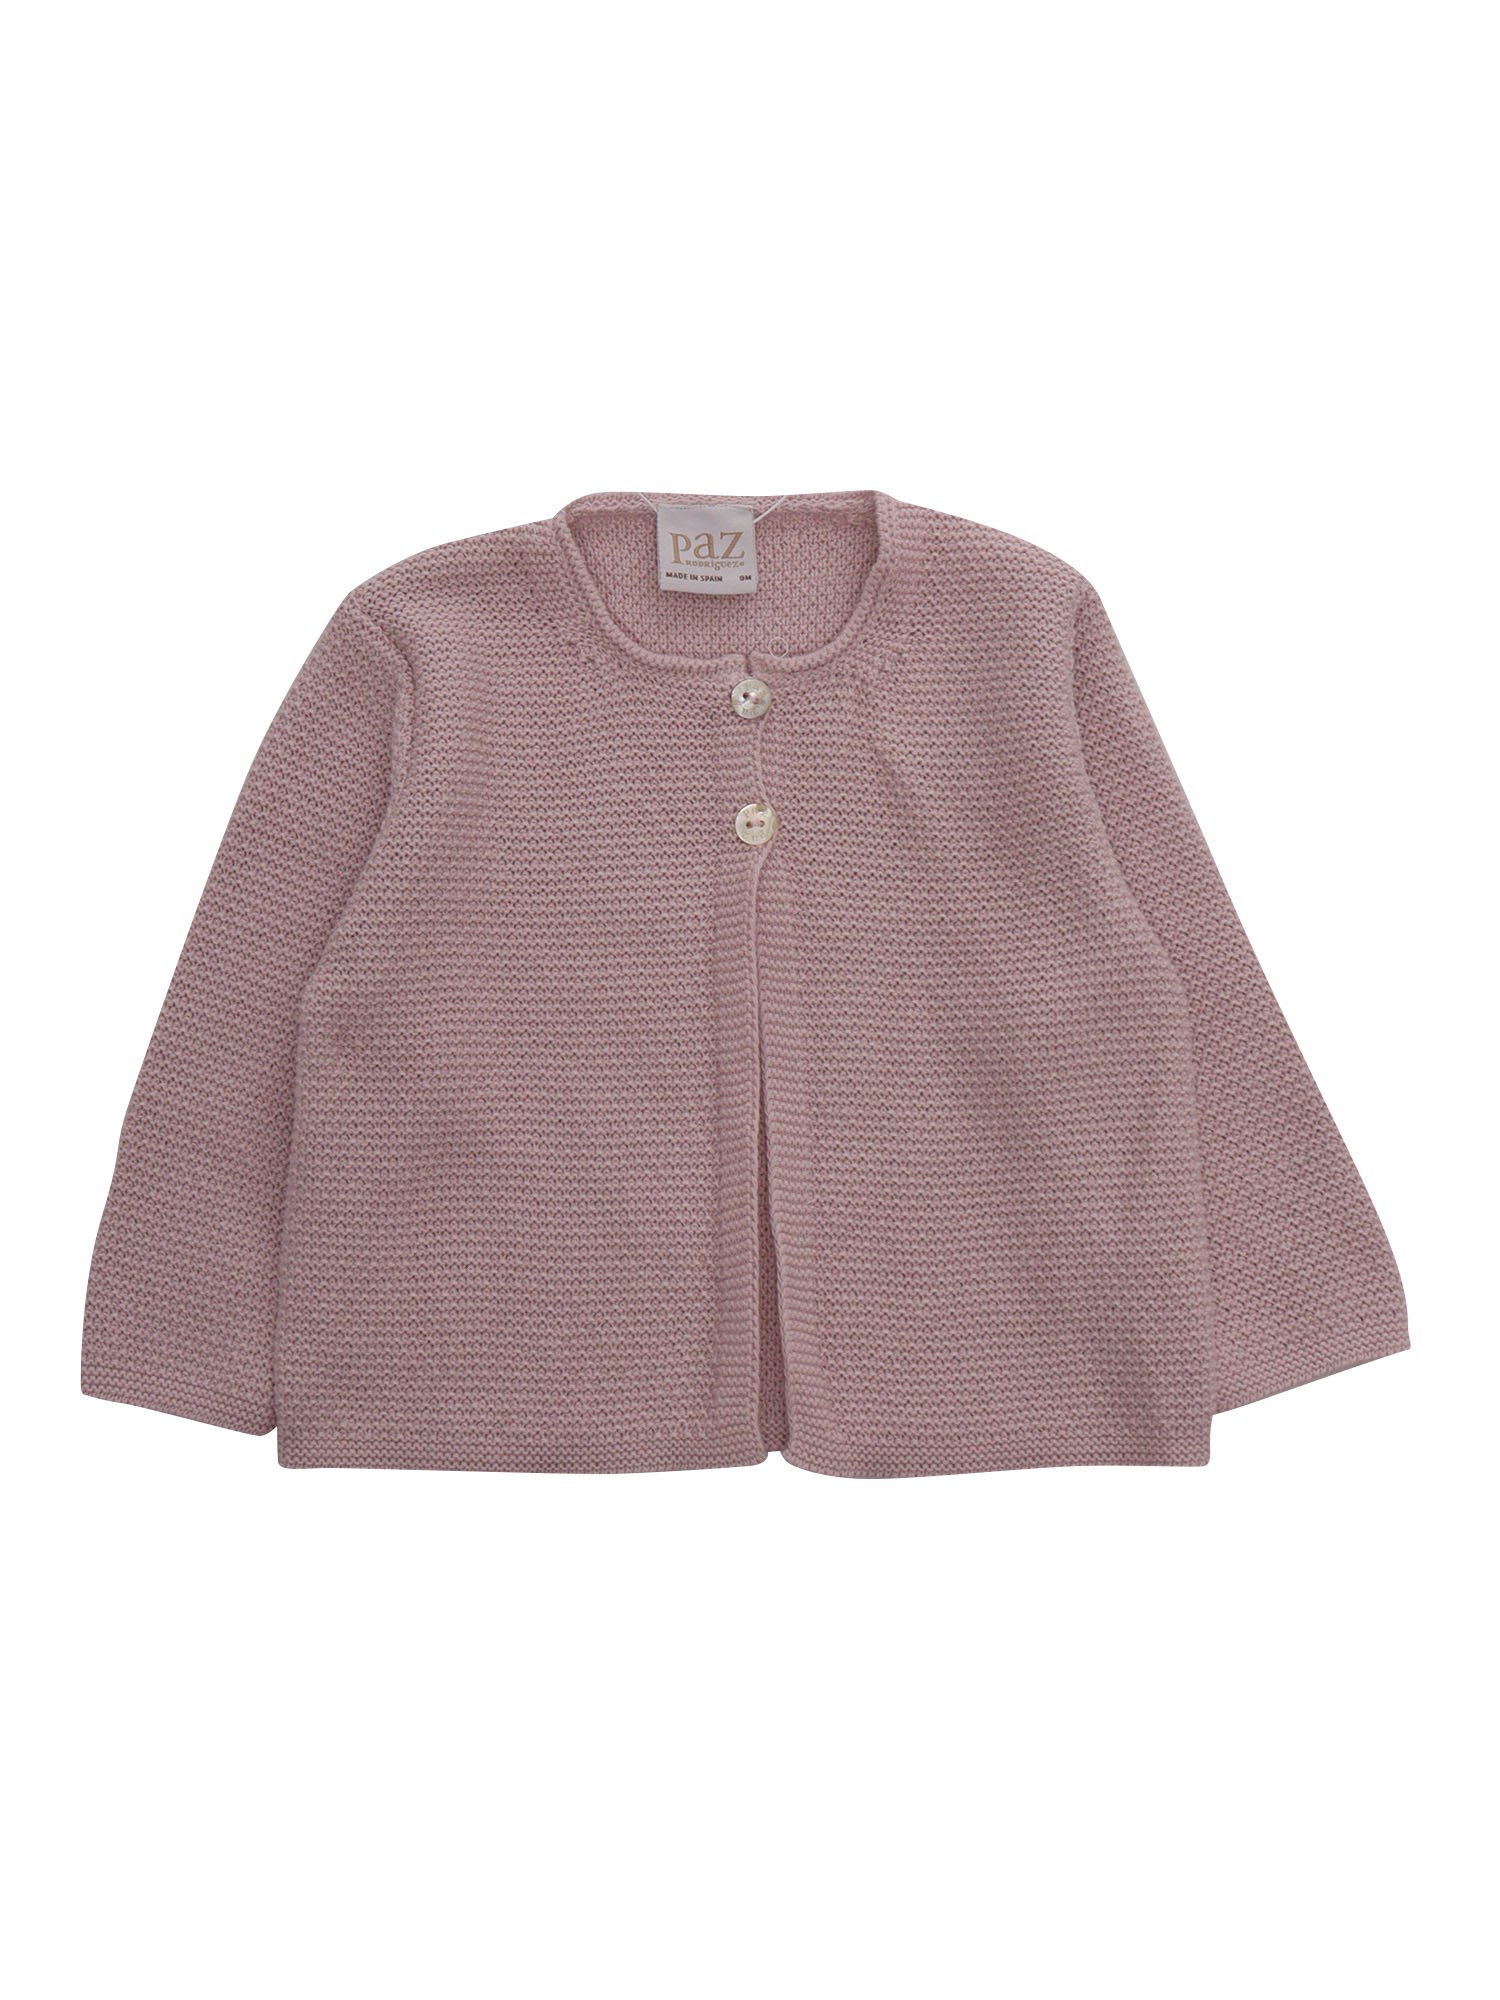 Paz Rodriguez Babies' Esencial Antique Pink Sweater